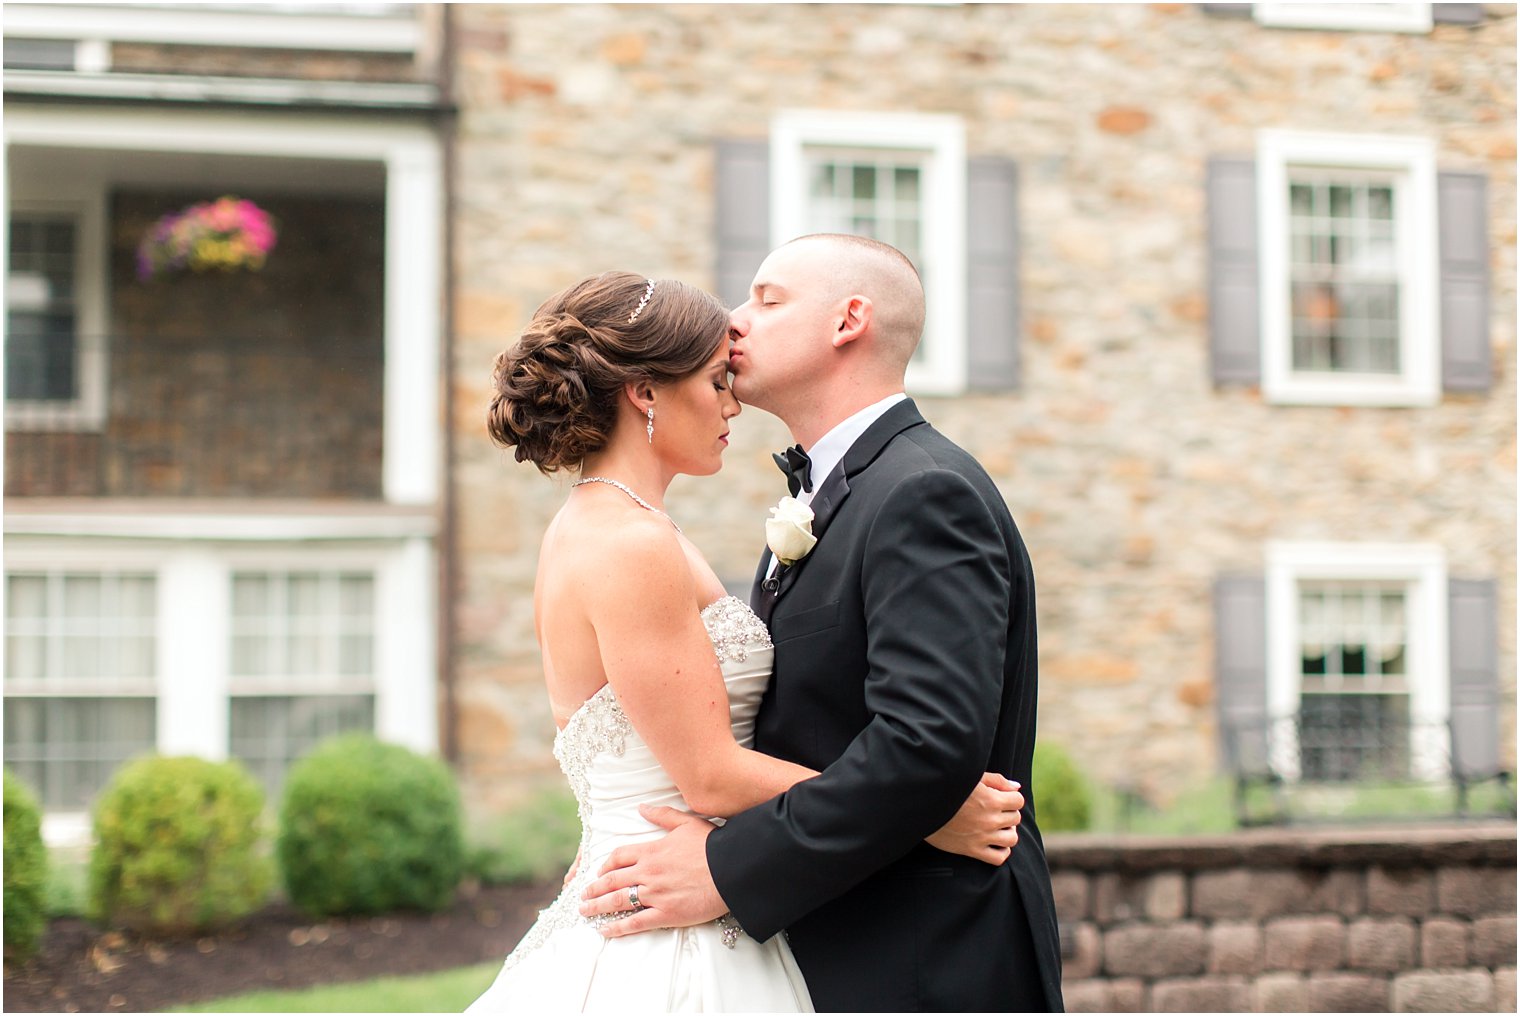 Forehead kiss on wedding day